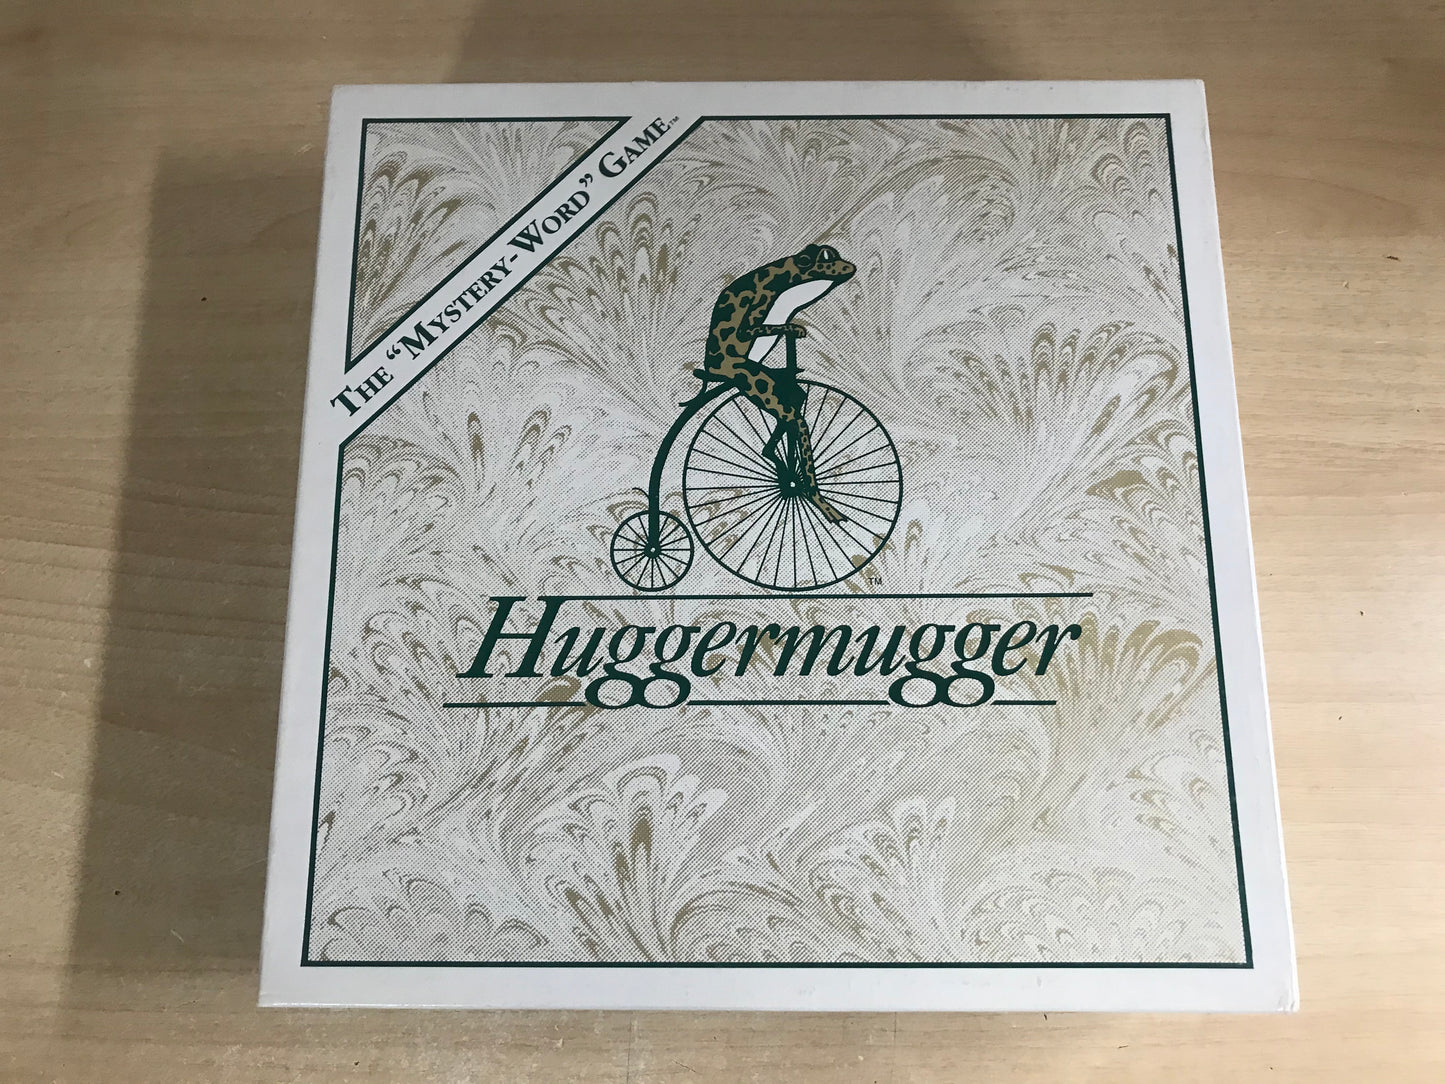 Game 1989 Vintage Hugger Mugger Board Game by Golden Complete! As New RARE